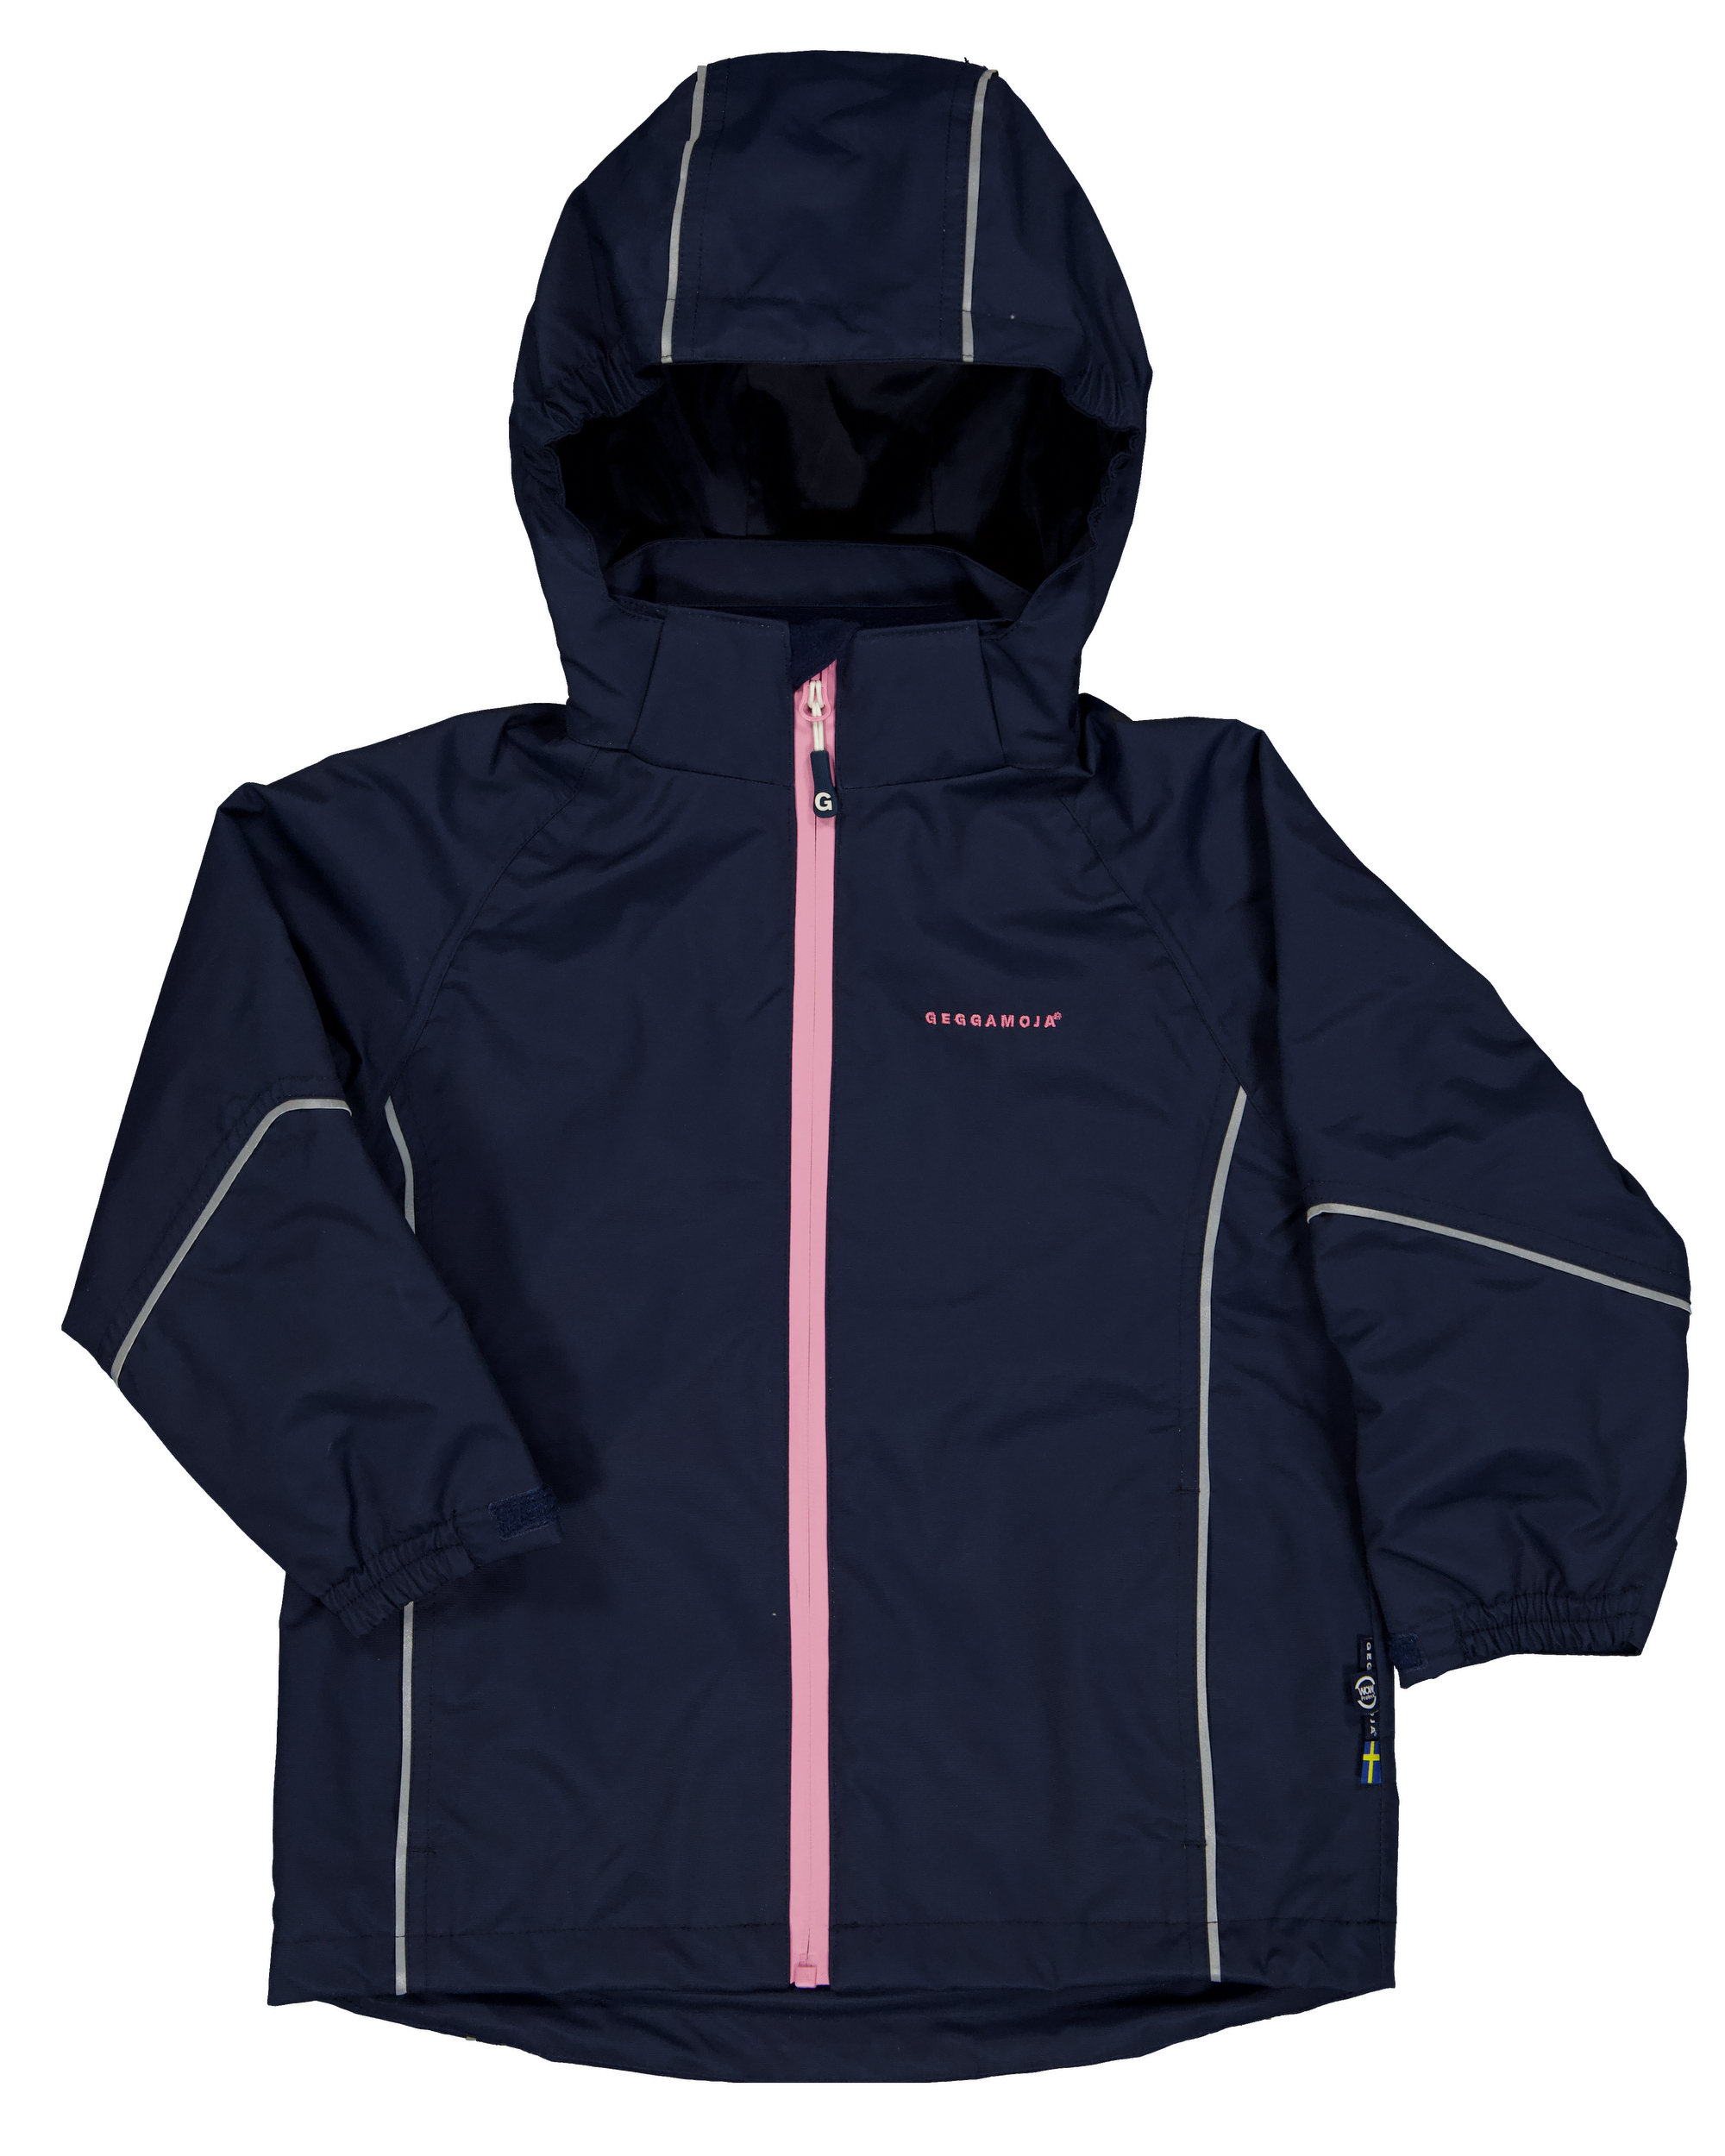 Shell jacket Navy/pink